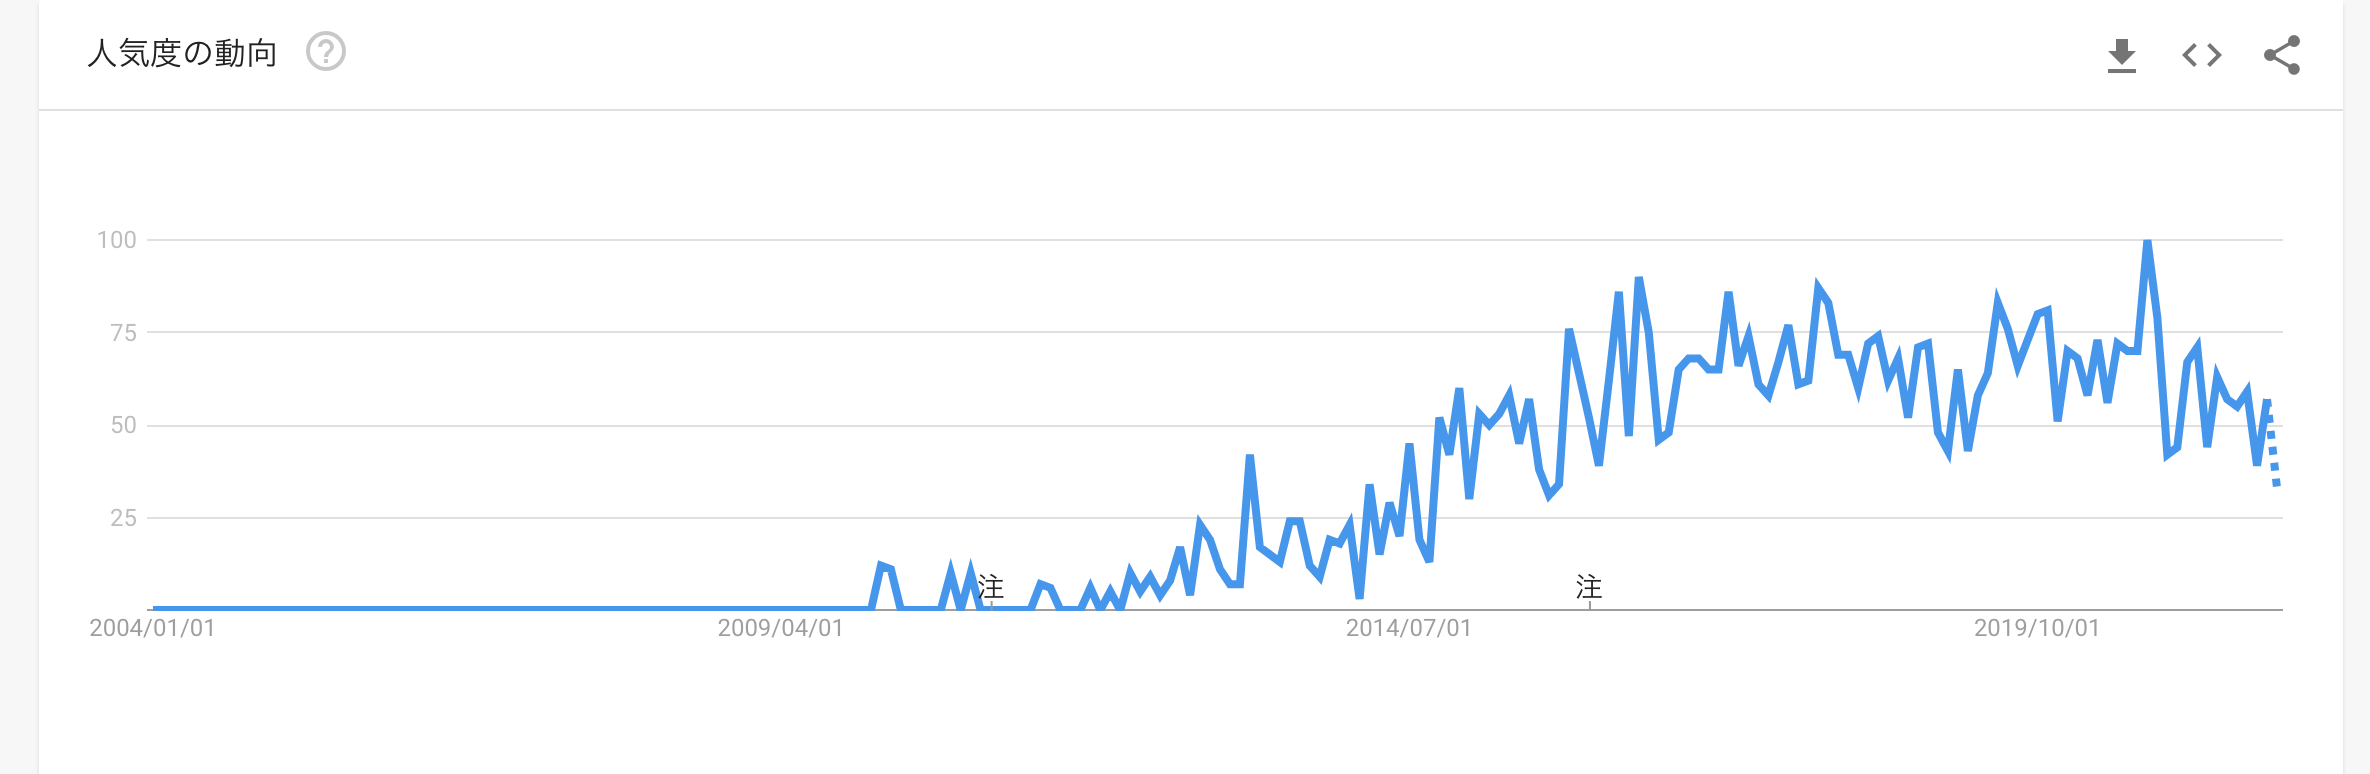 Google Trendsで見る「オウンドメディア」検索ボリューム推移